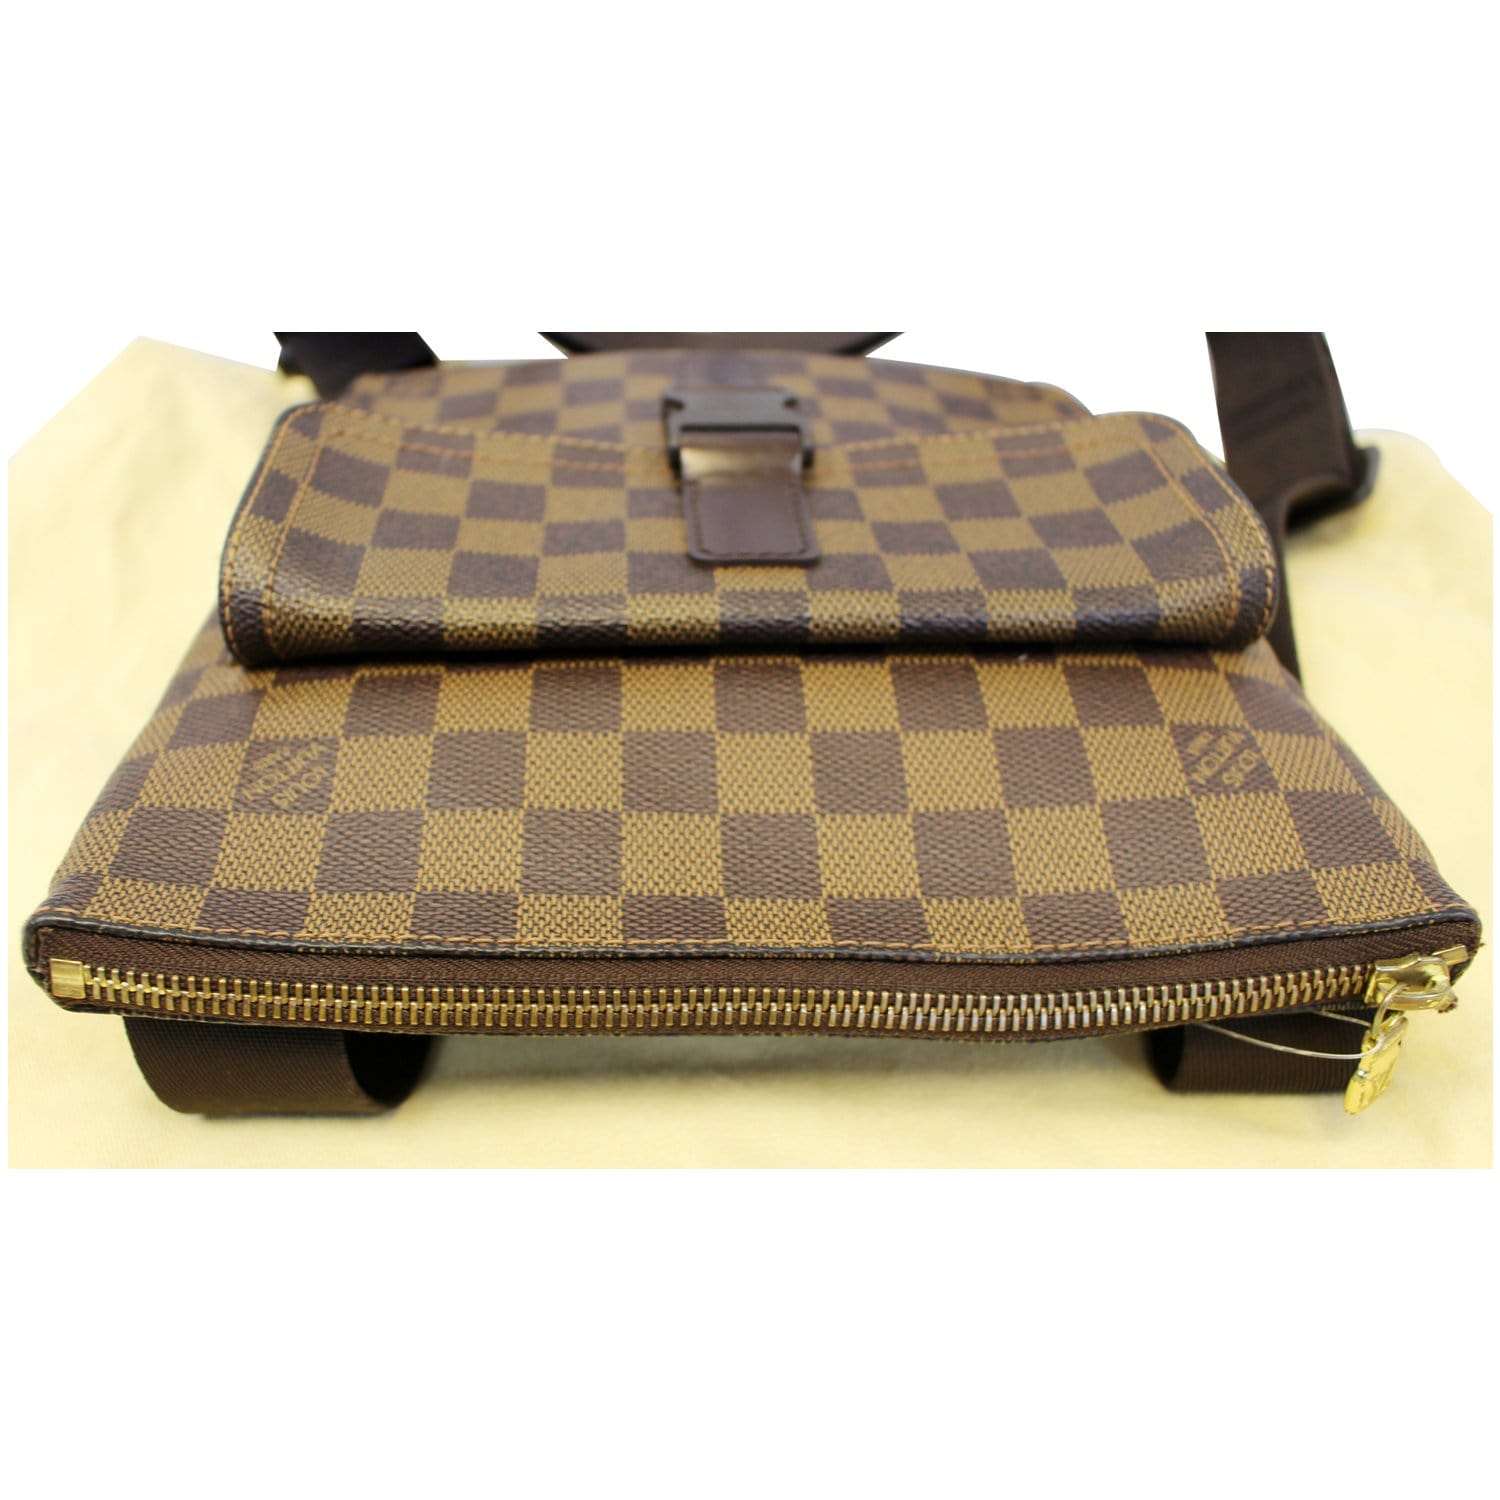 Louis Vuitton Damier Pochette Melville Crossbody Bag N51127